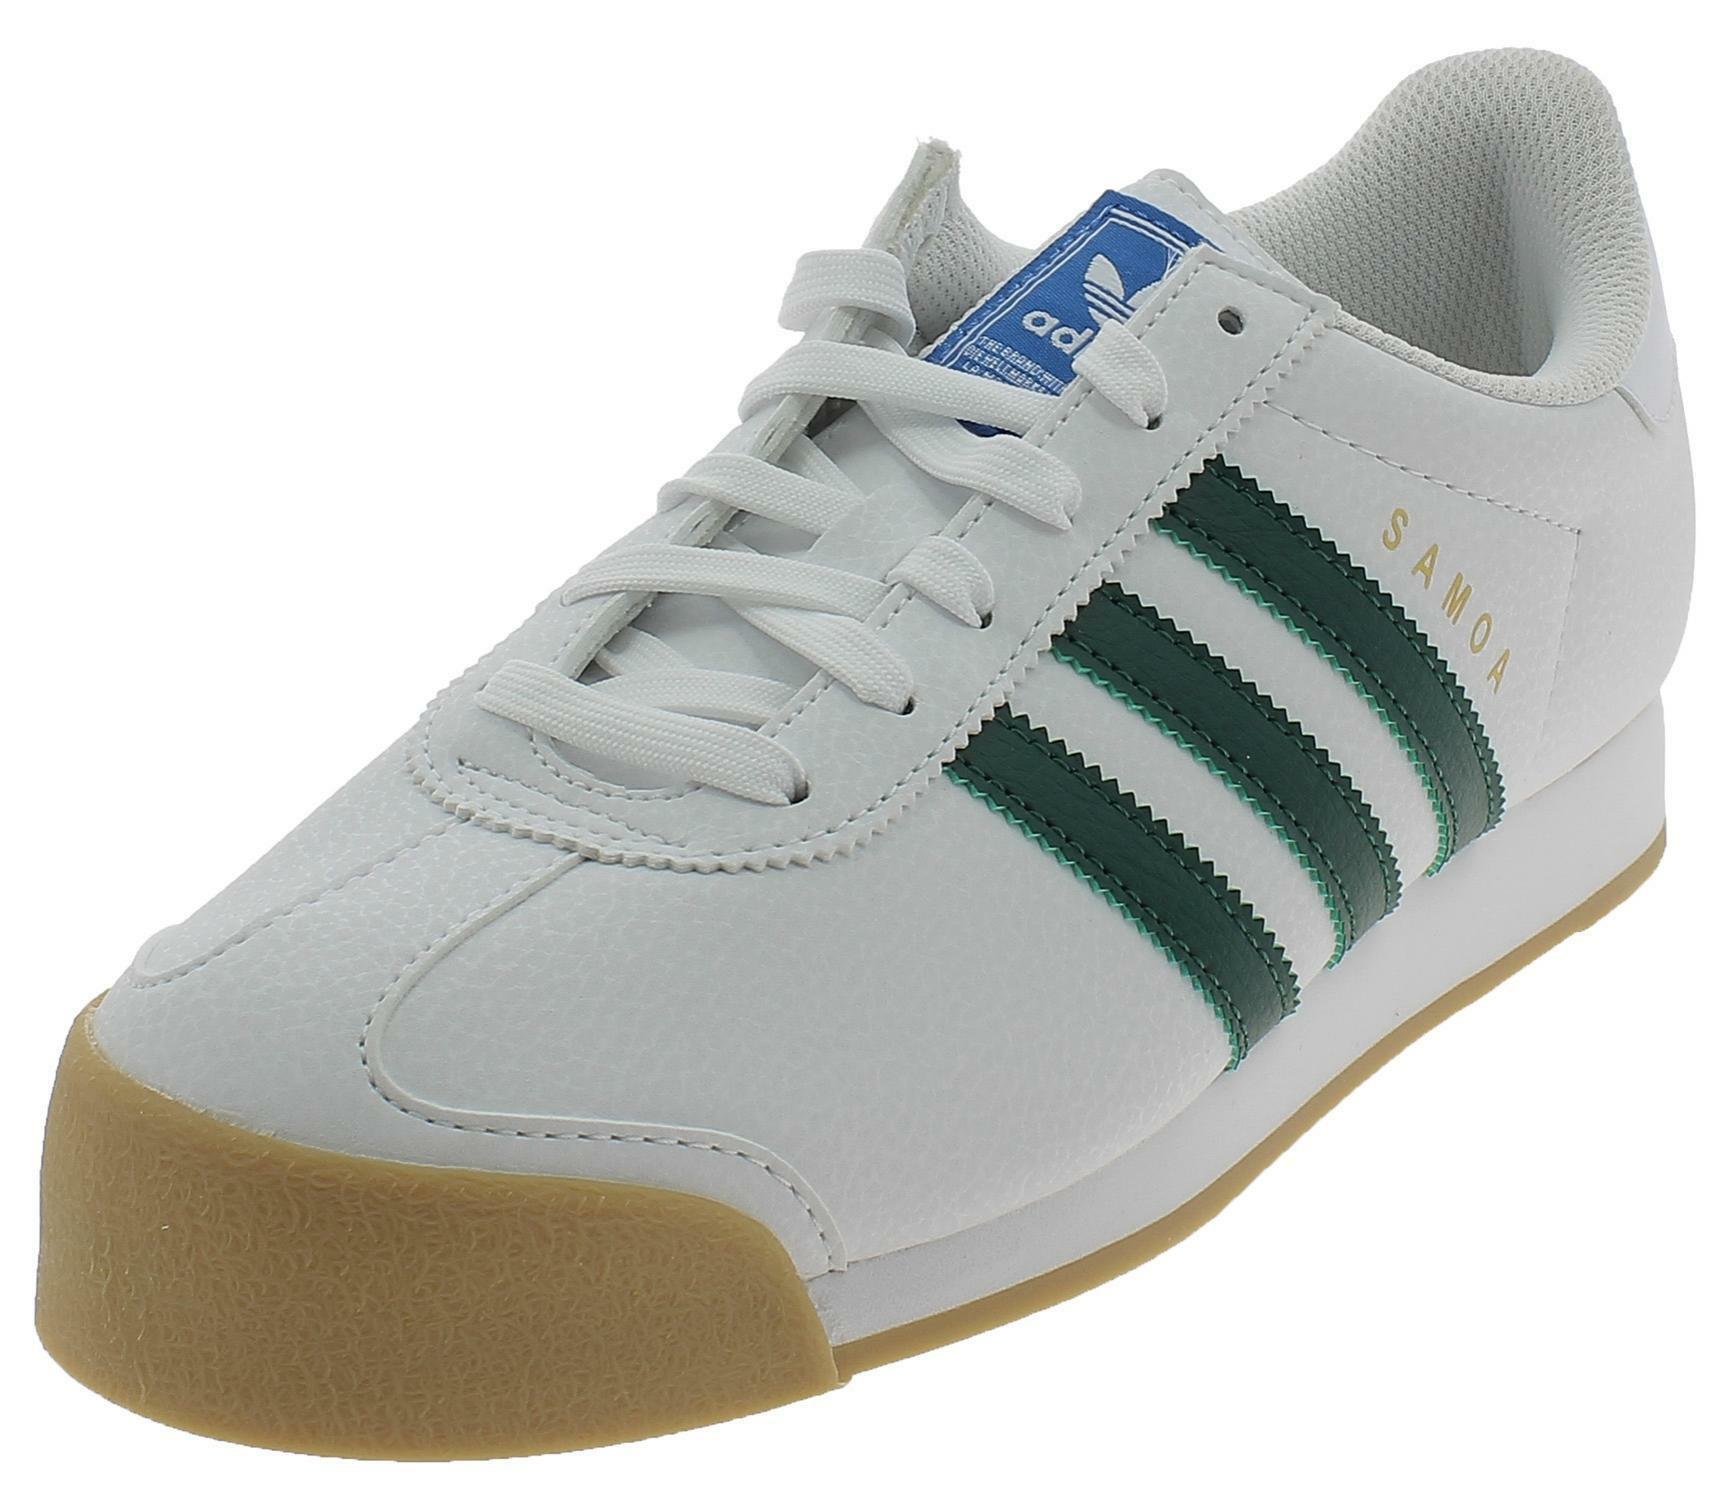 Adidas samoa scarpe sportive uomo bianche eg6089